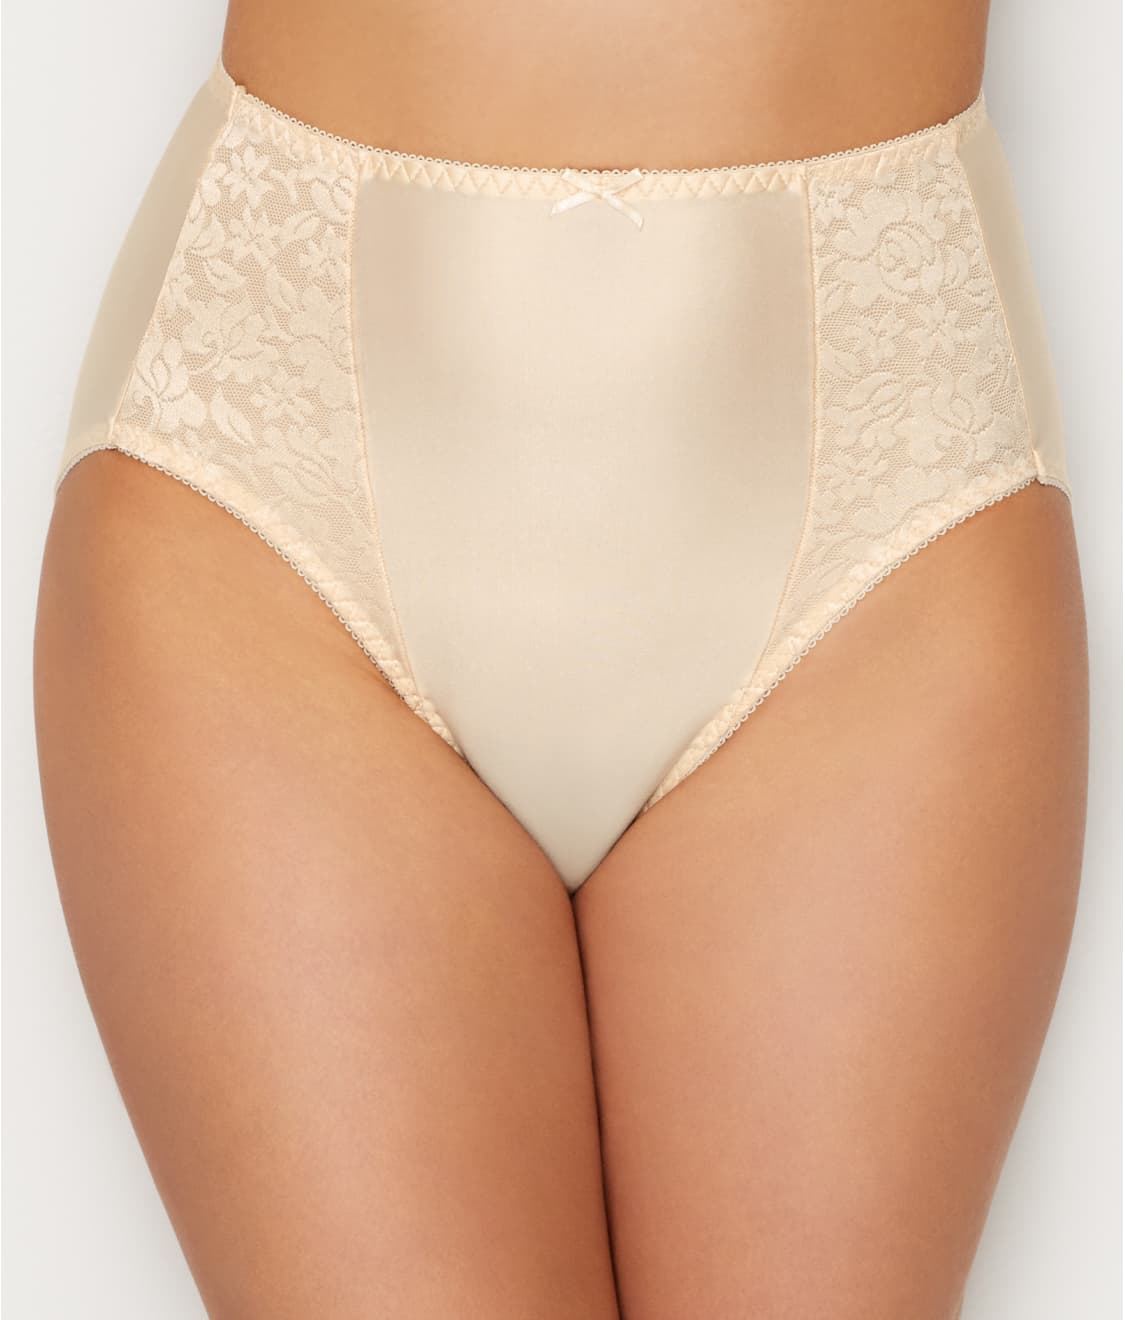 g High panties light support white new size 42/44 marks bronzini 